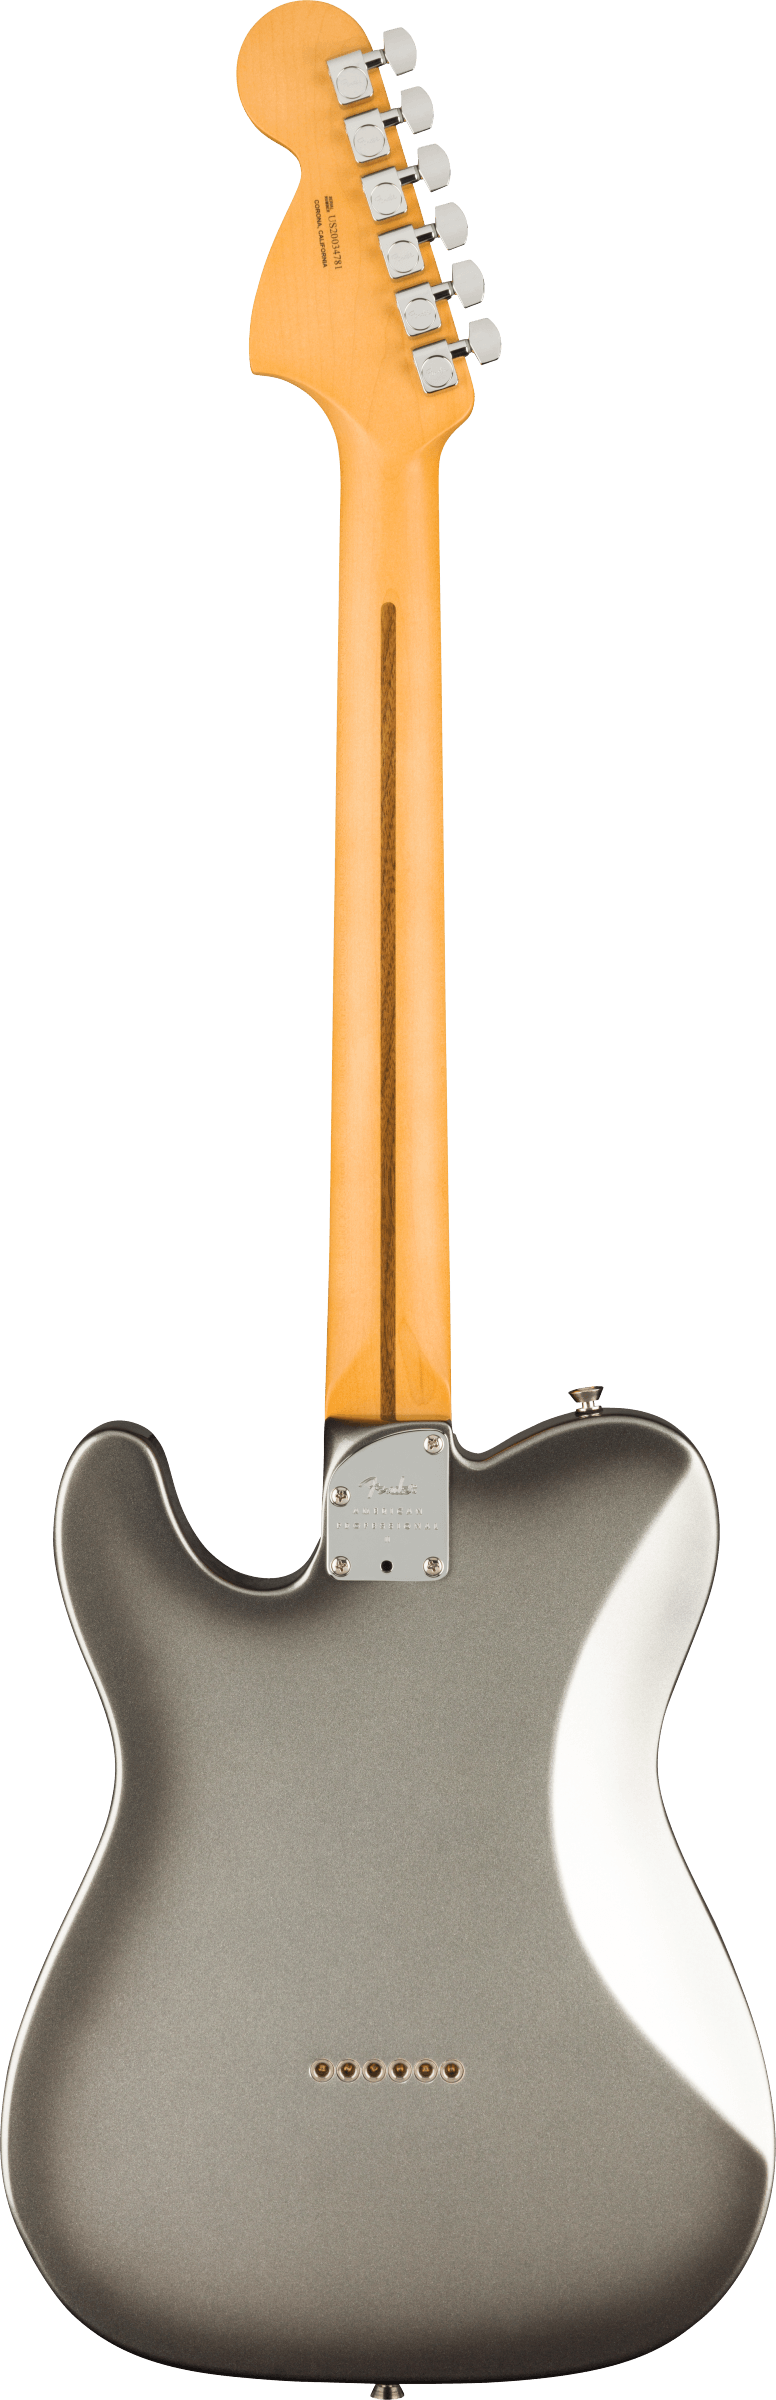 Back of Fender Telecaster electric guitar in Mercury Tone Shop Guitars Dallas Texas